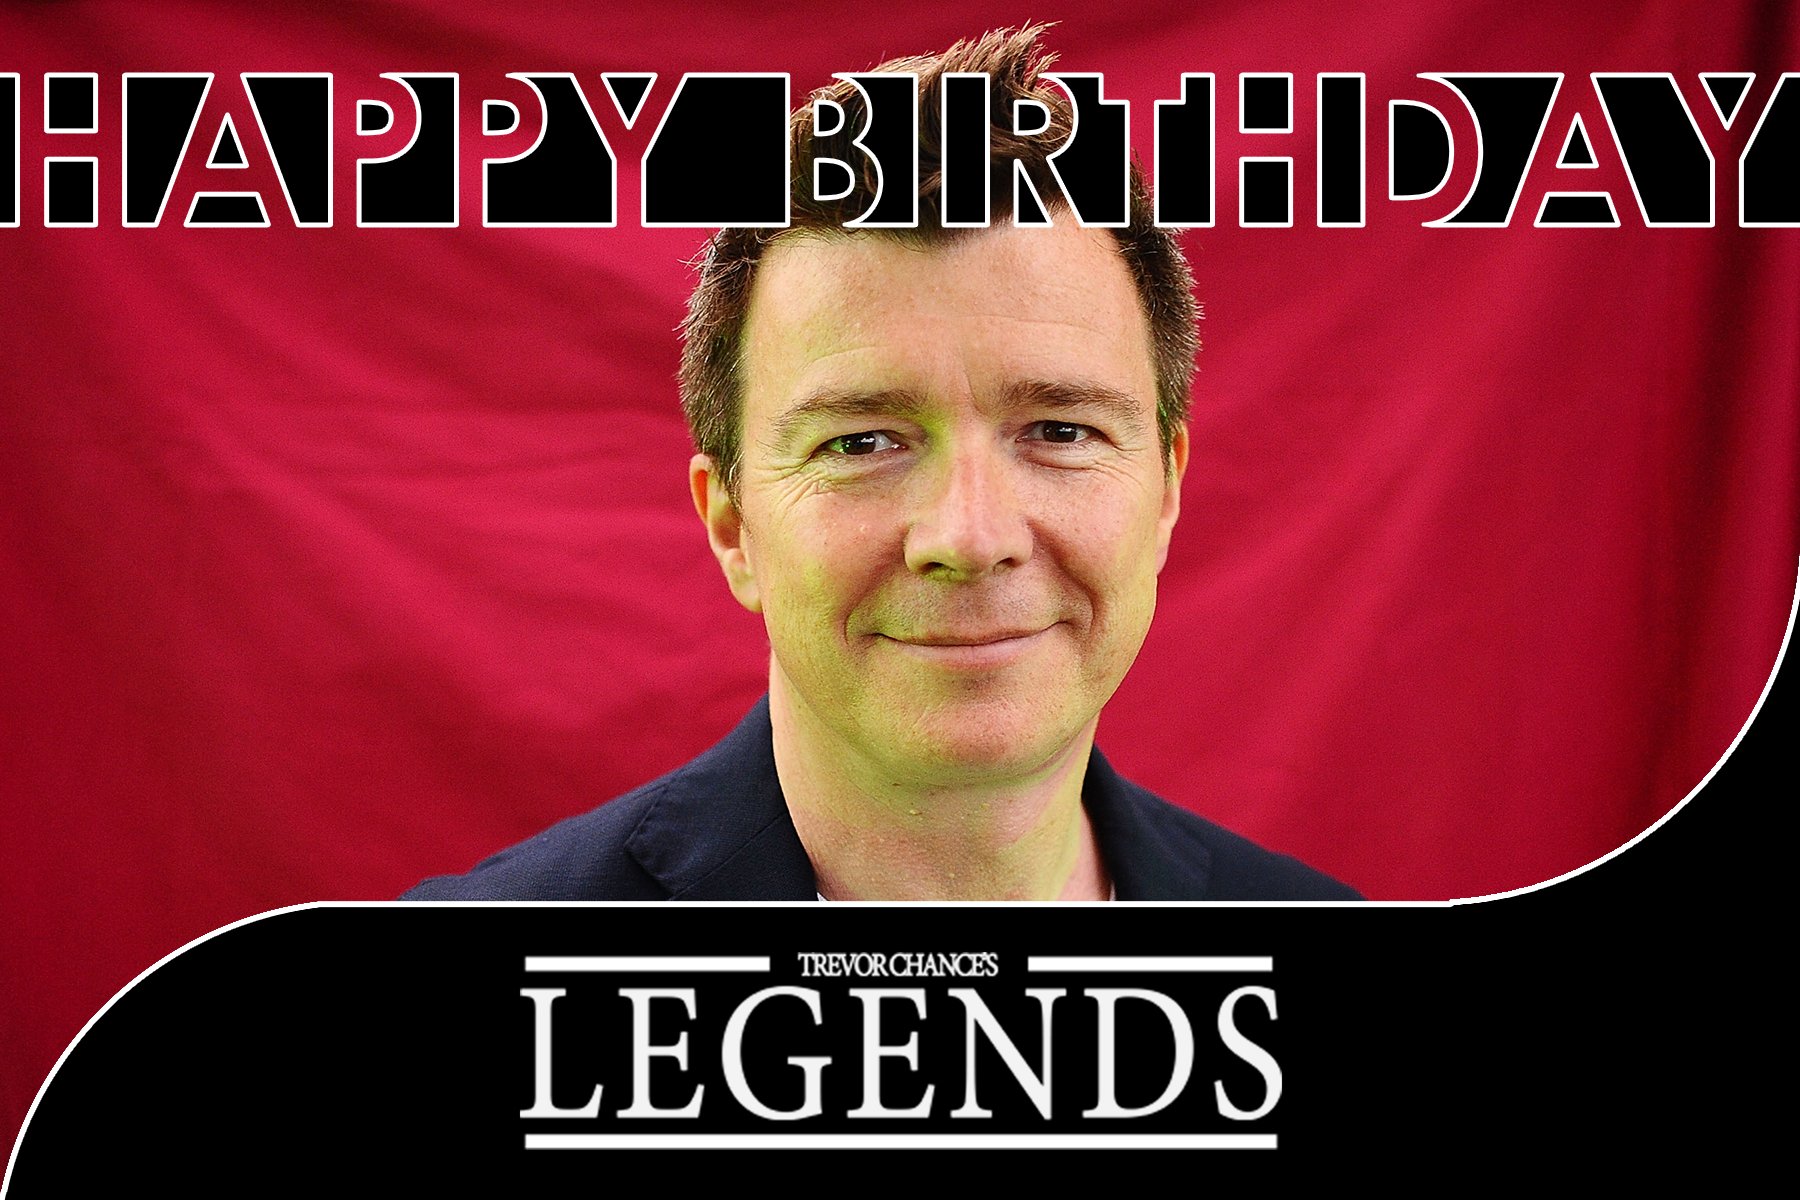 It\s Rick Astley\s 51st birthday today! Happy Birthday, Rick... 